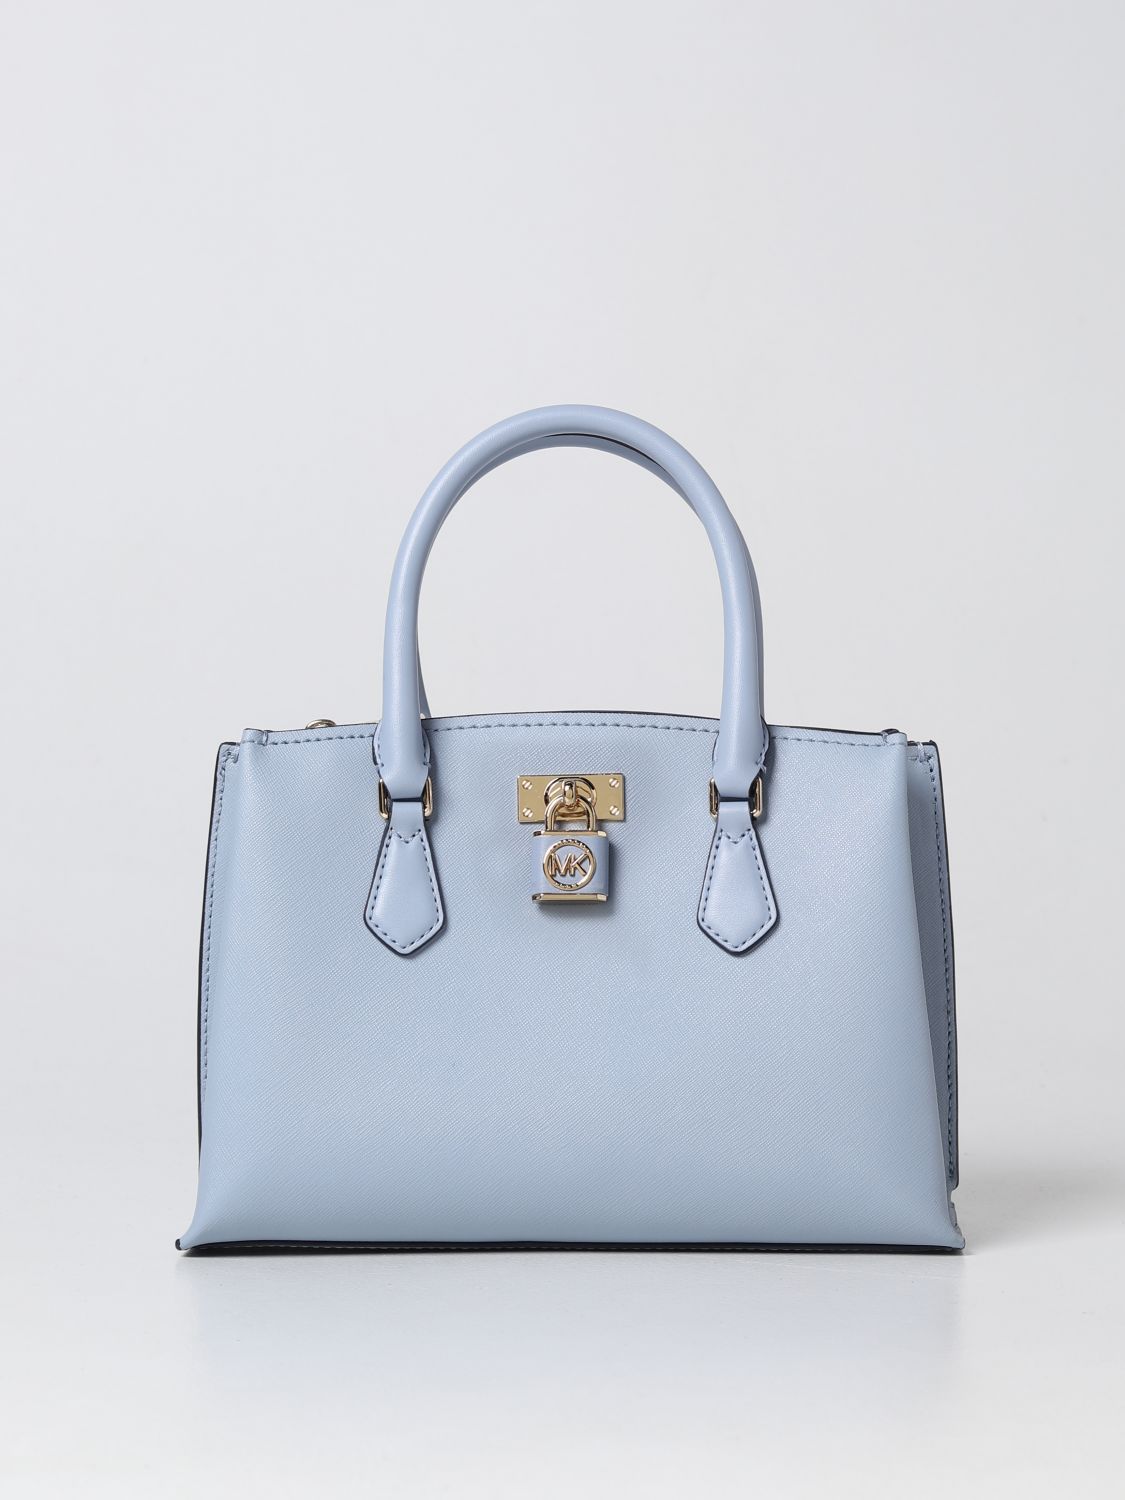 MICHAEL KORS: handbag for woman - Blue | Michael Kors handbag 30S3GR0S1L  online on 